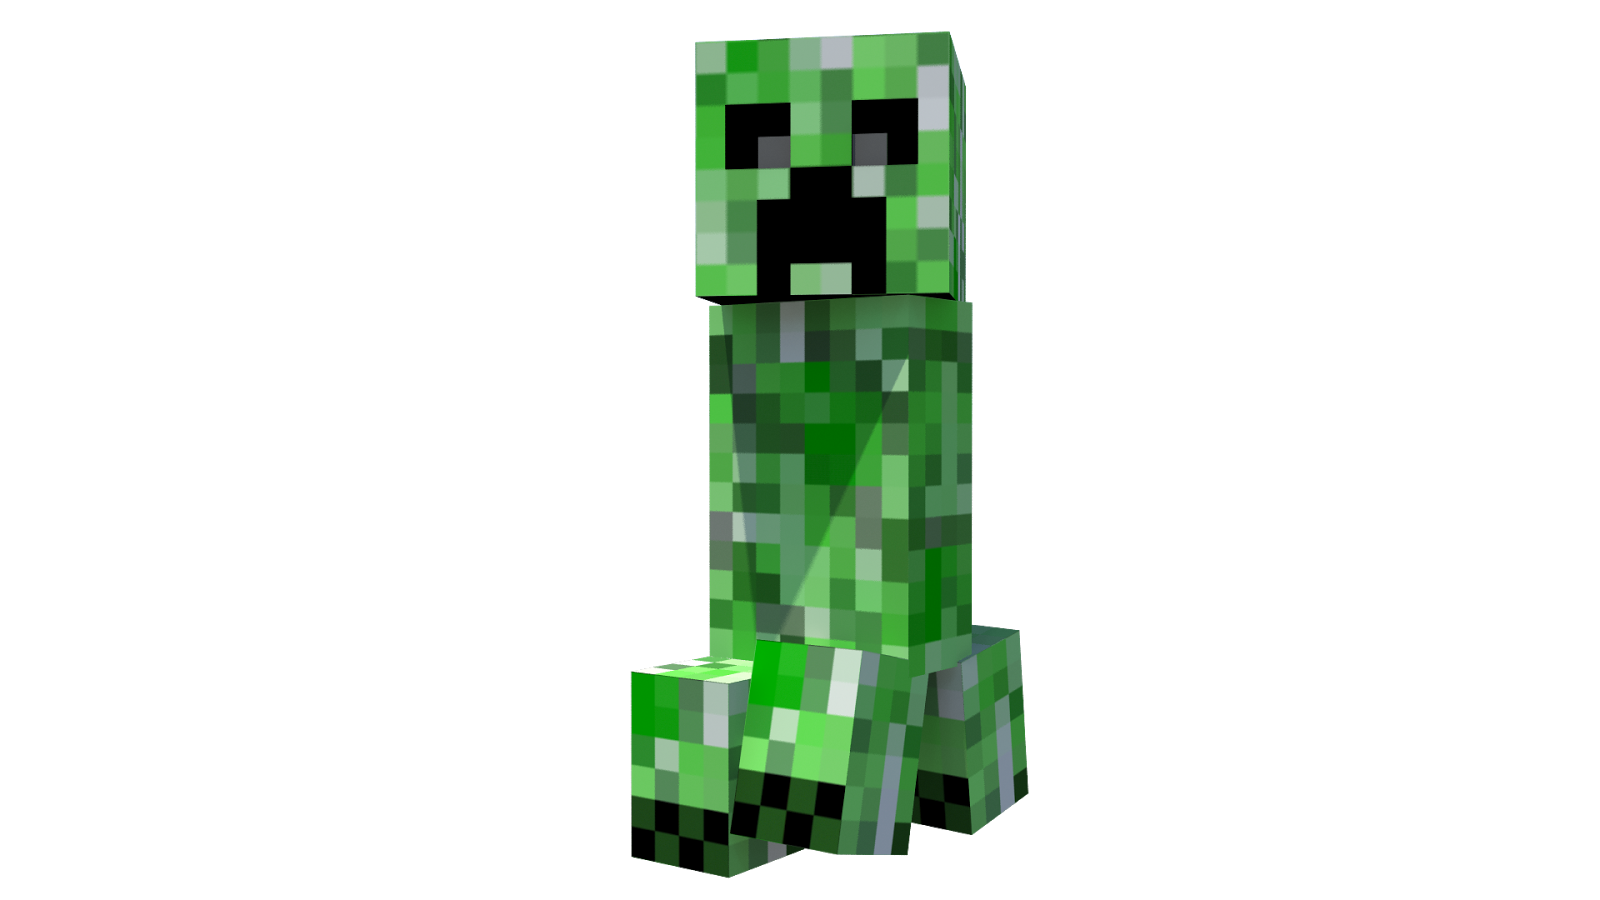 Minecraft Green Creeper 9 Can Mini Fridge 6.7L 1 Door Ambient Lighting 10.4  in H 10 in W 10 in D